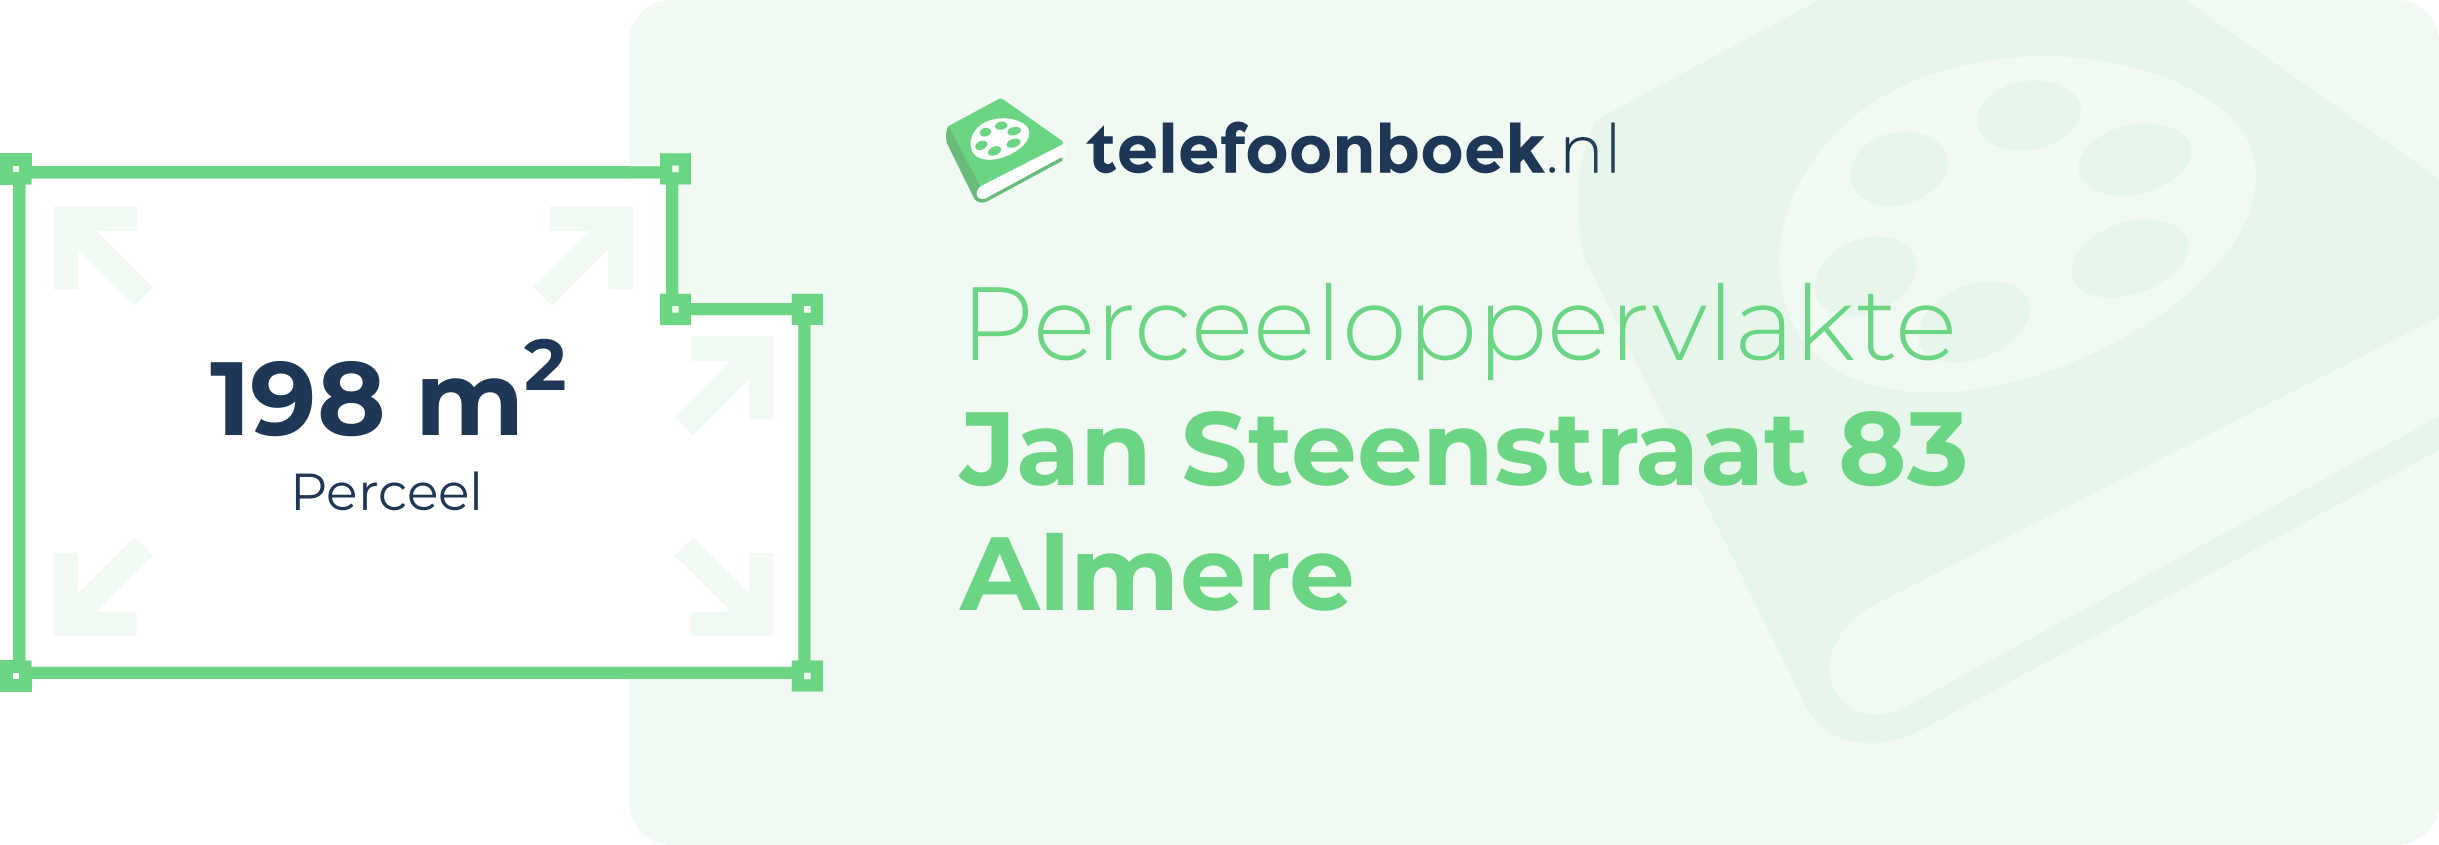 Perceeloppervlakte Jan Steenstraat 83 Almere